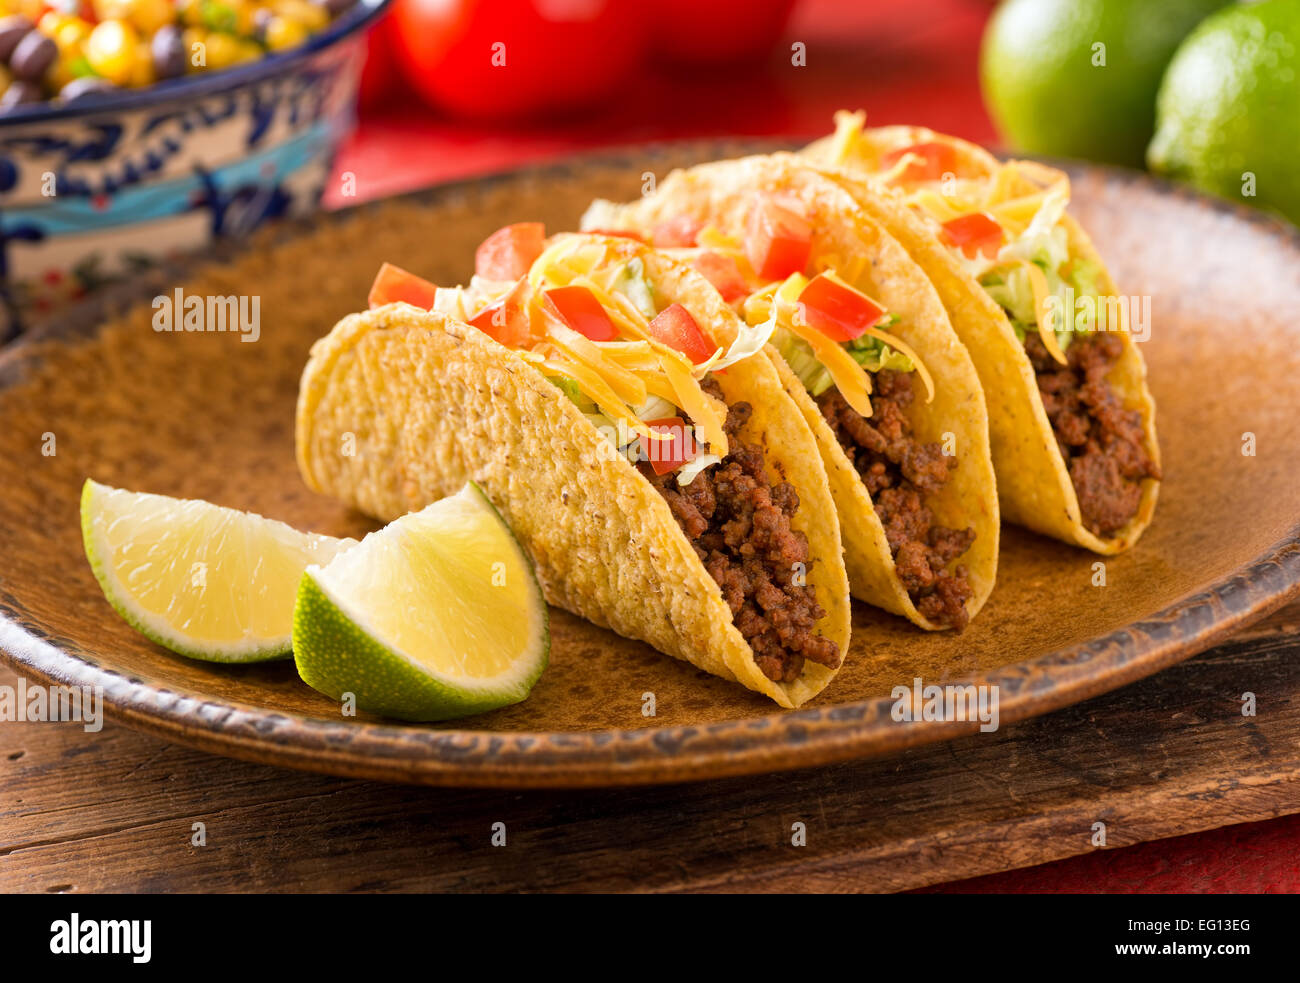 Ein Teller mit leckeren Tacos mit Limetten, Tomaten, Salat und Käse. Stockfoto